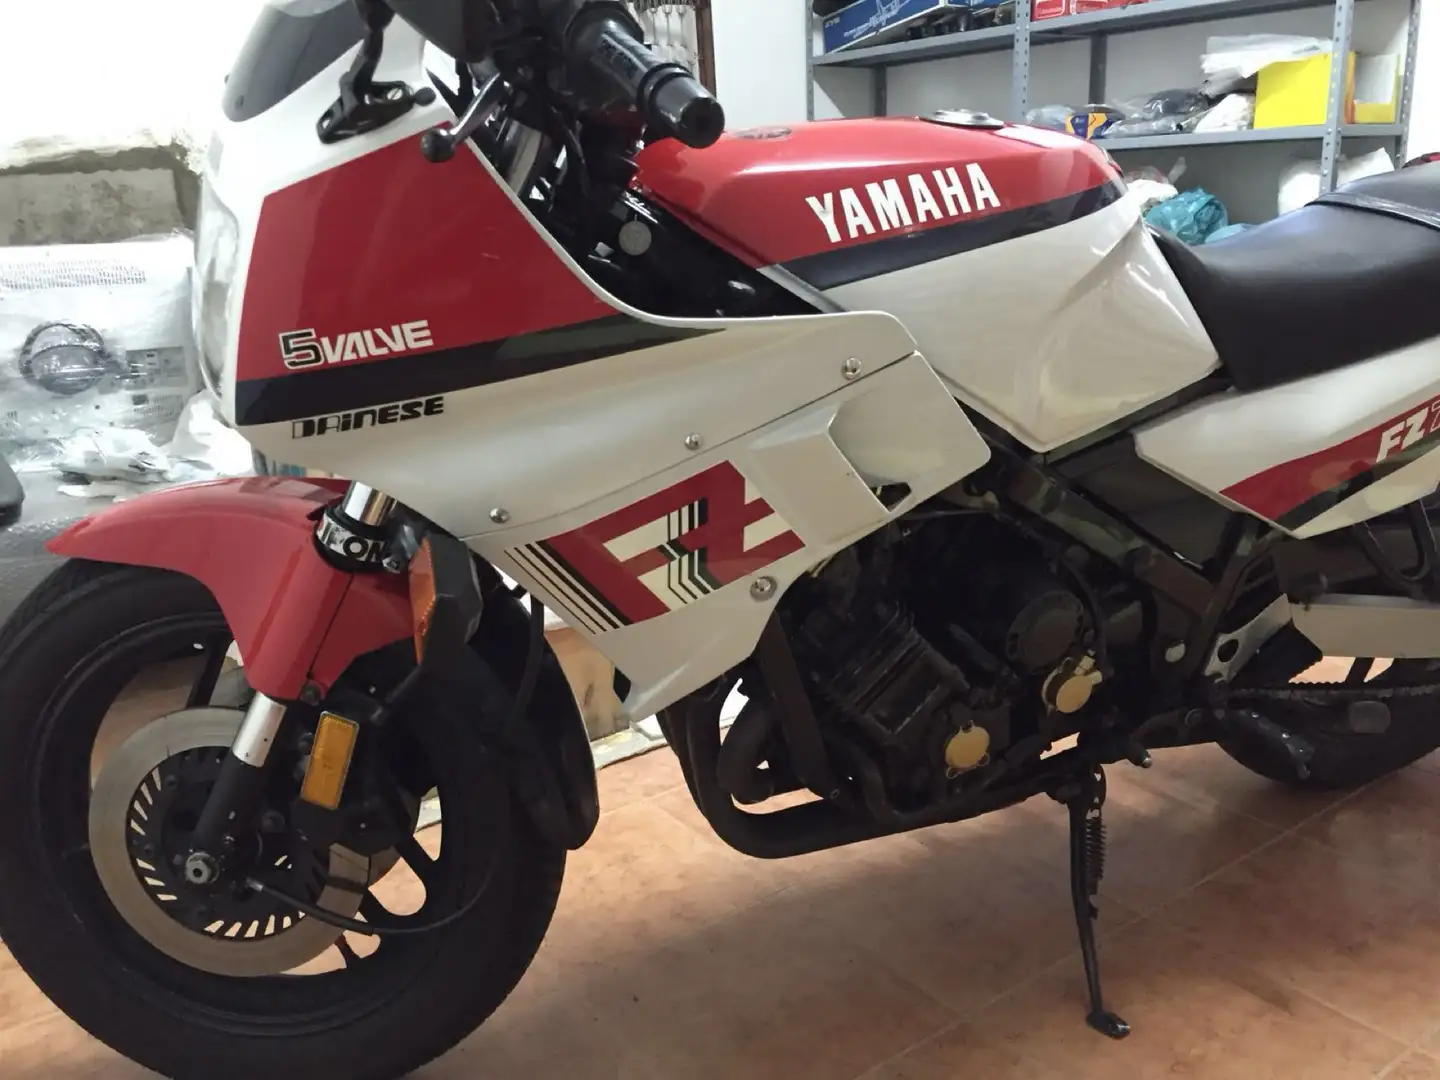 Yamaha FZ 750 immatricolazione canada colorazione bianca rossa Weiß - 1